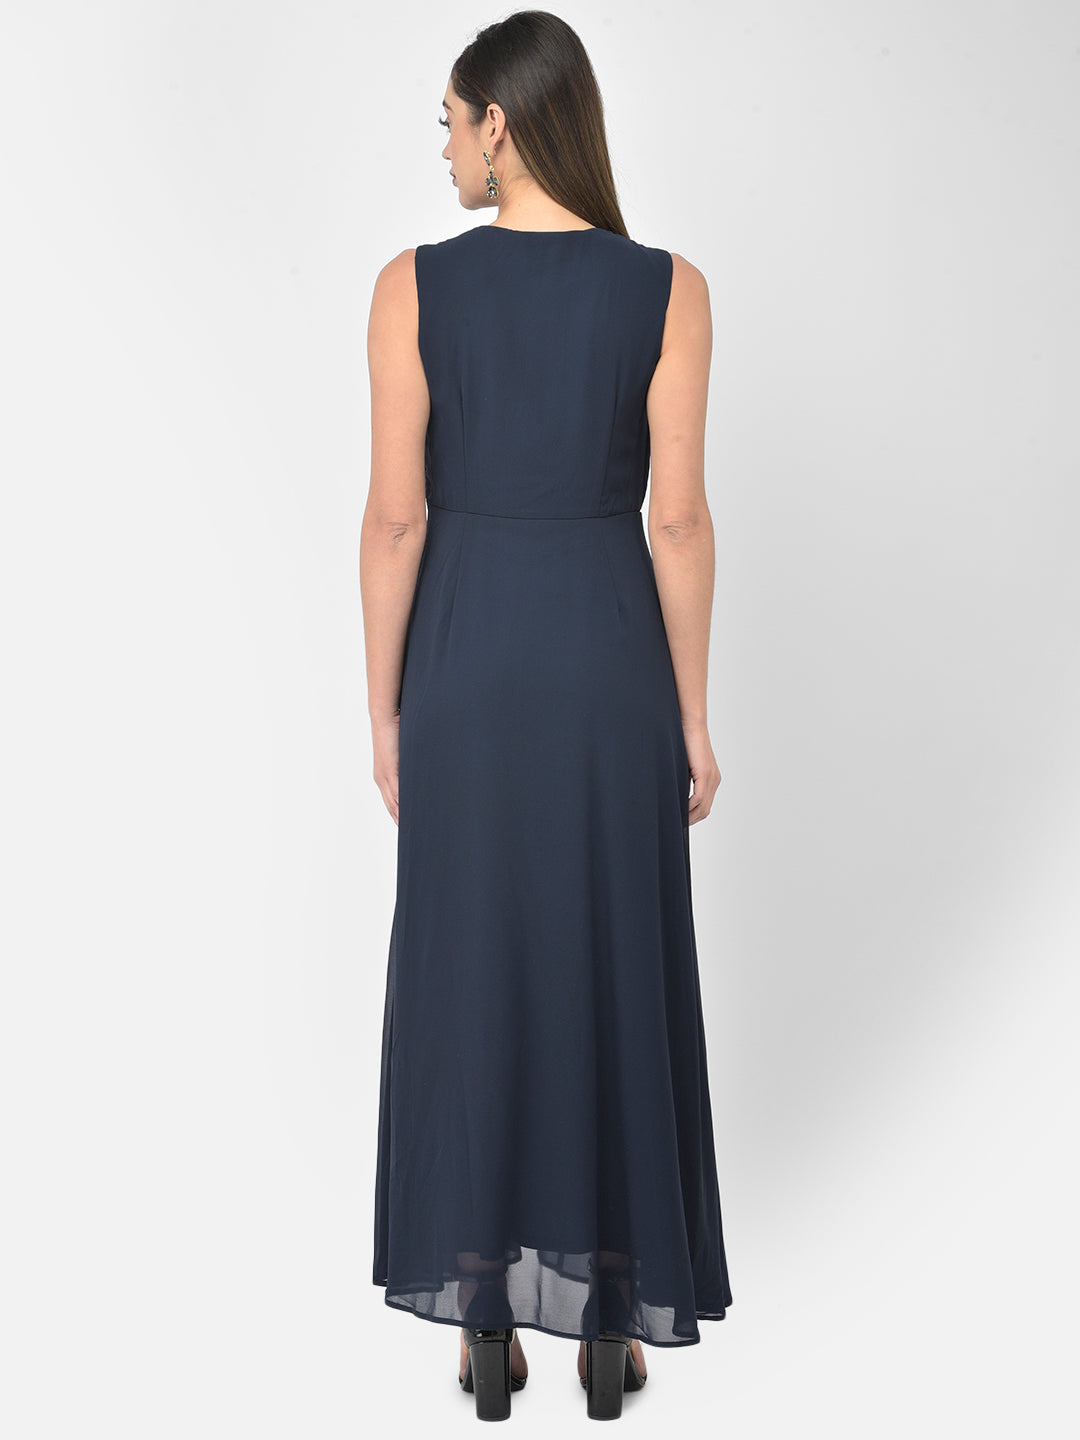 Blue Sequin Sleeveless Maxi Dress